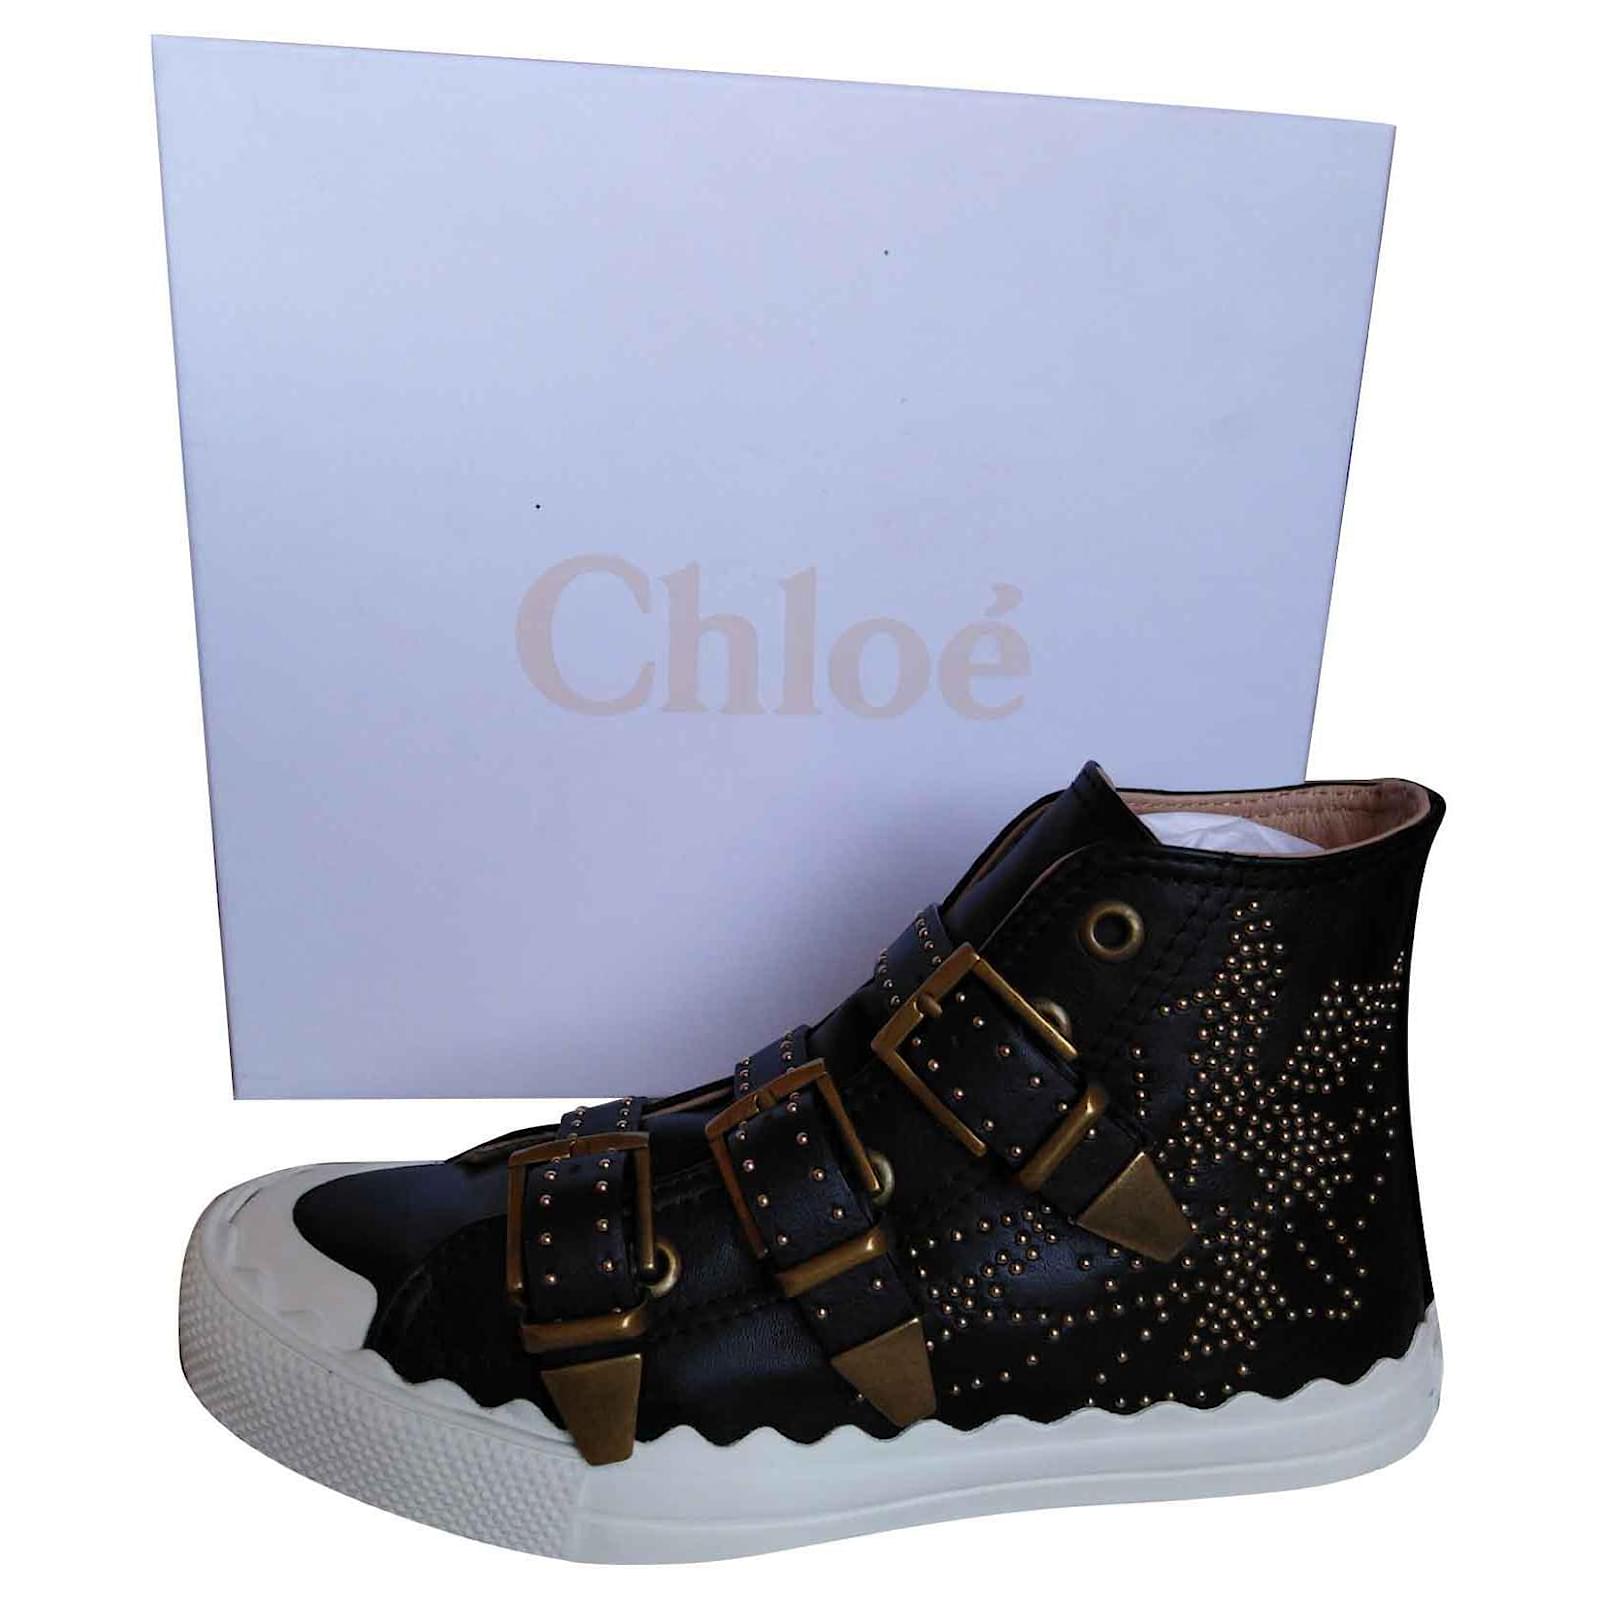 Chloé Susanna Sneakers Leather Black 